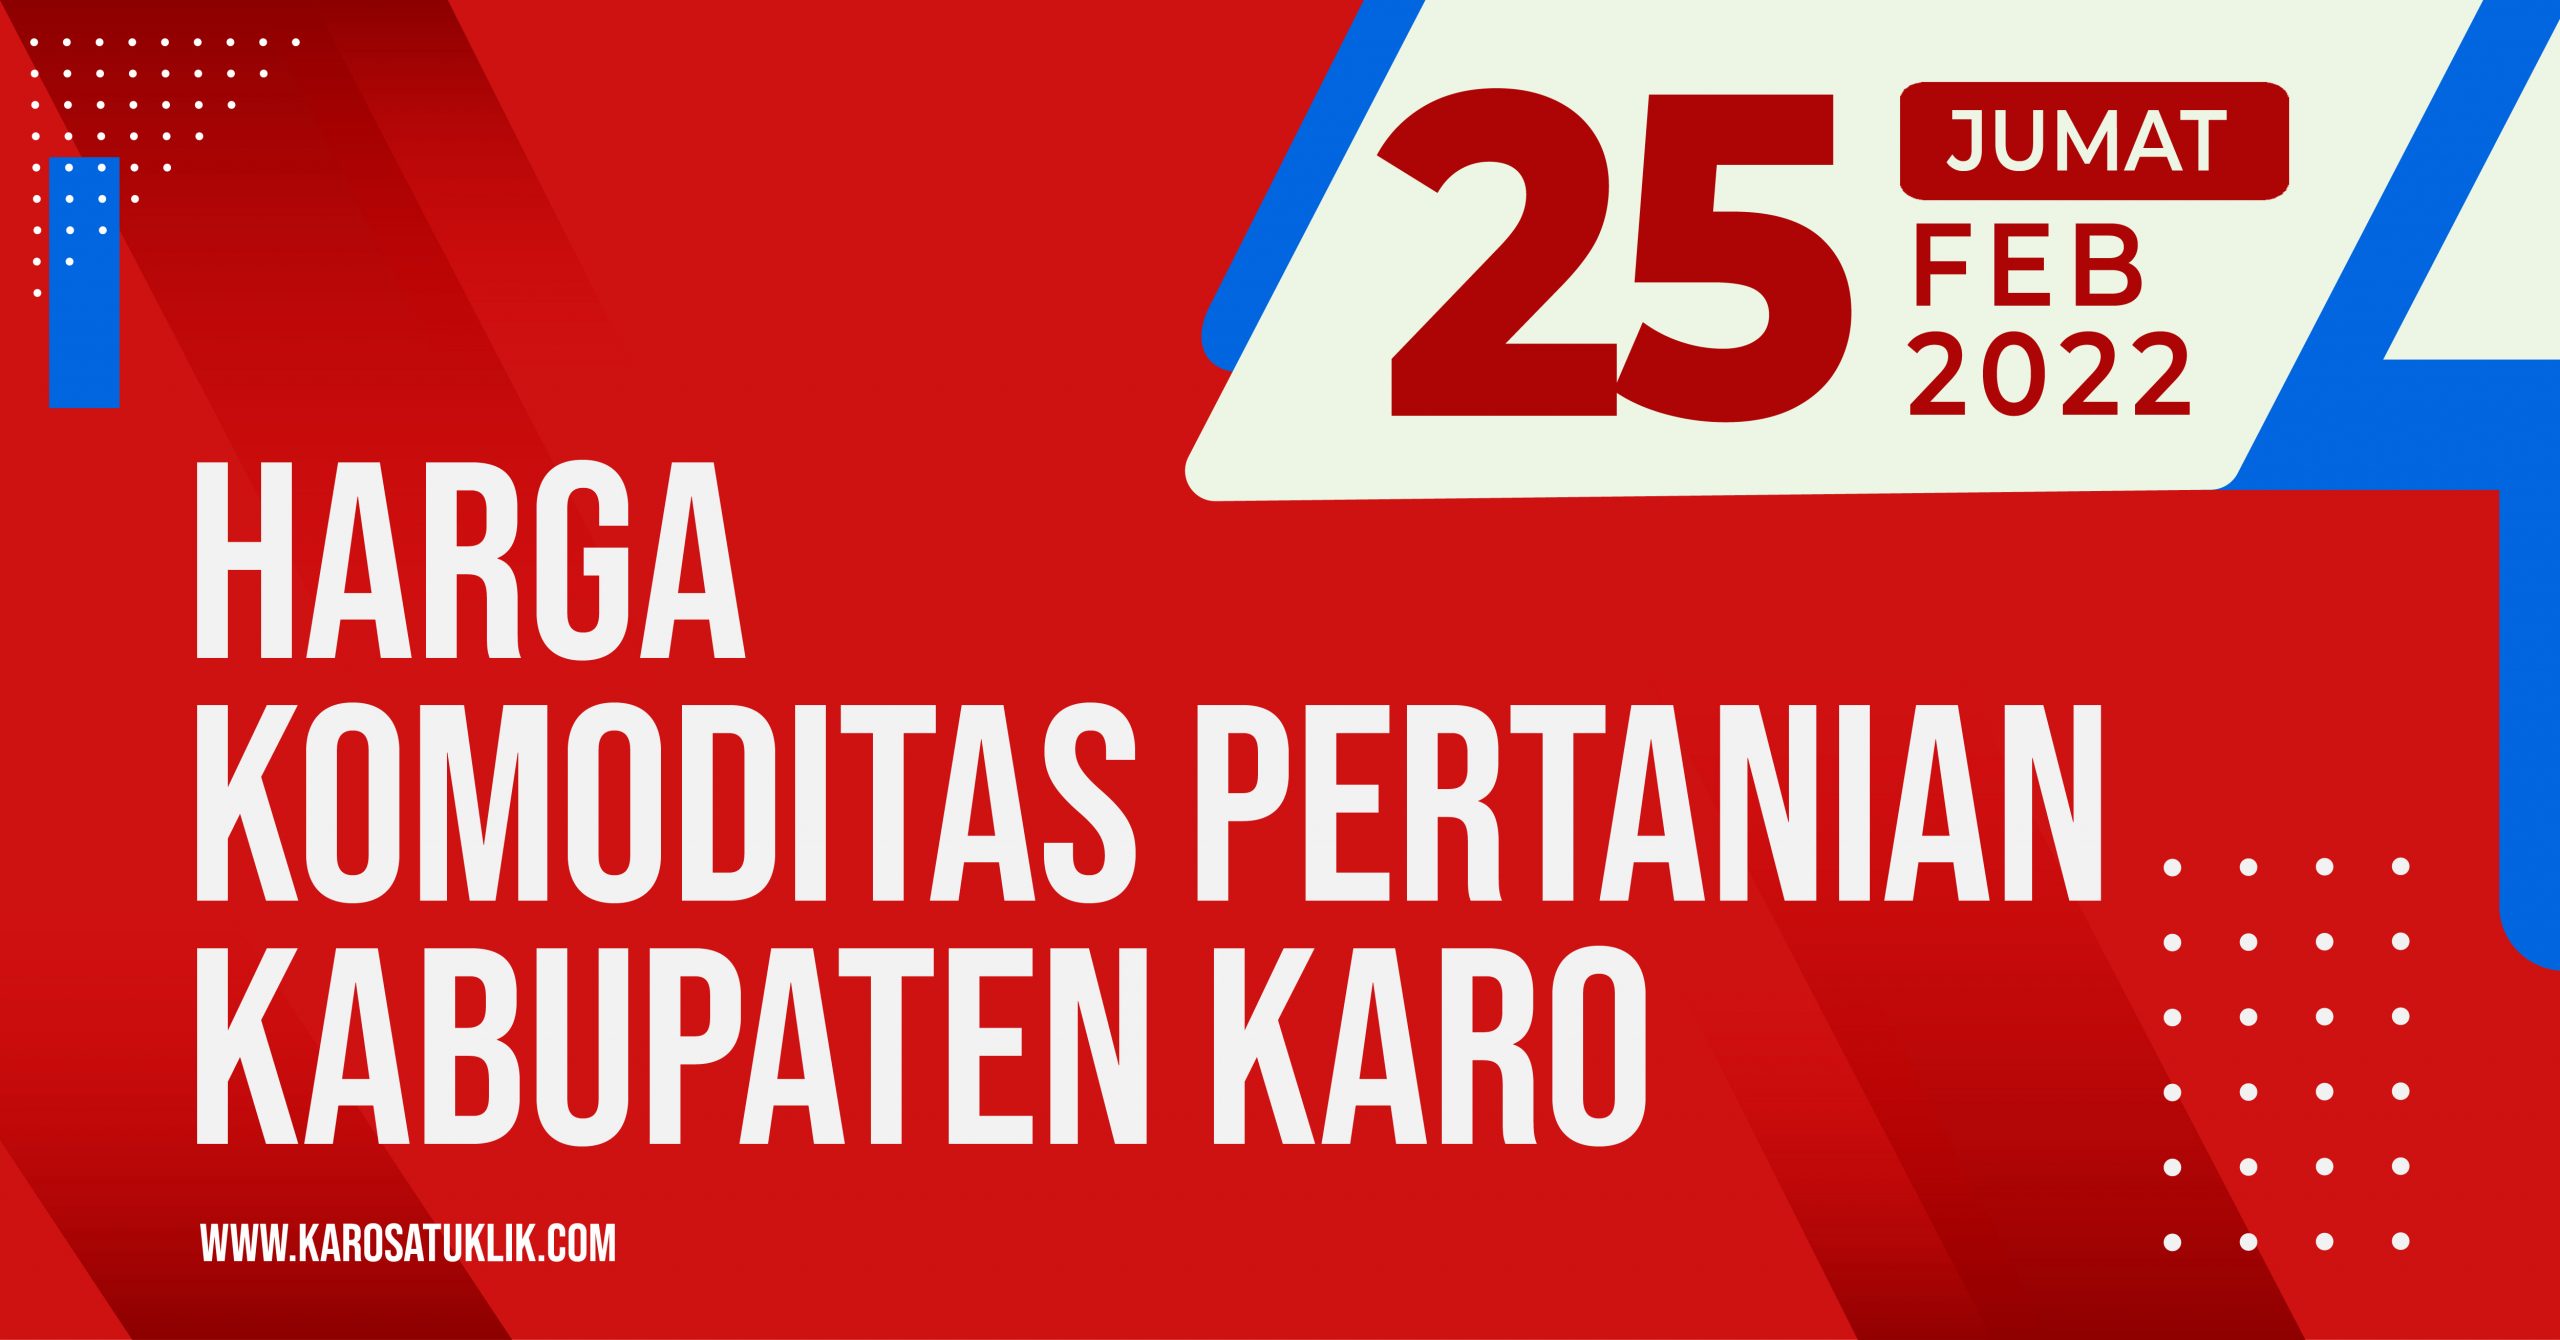 Daftar Harga Komoditas Pertanian Kabupaten Karo, 25 Februari 2022